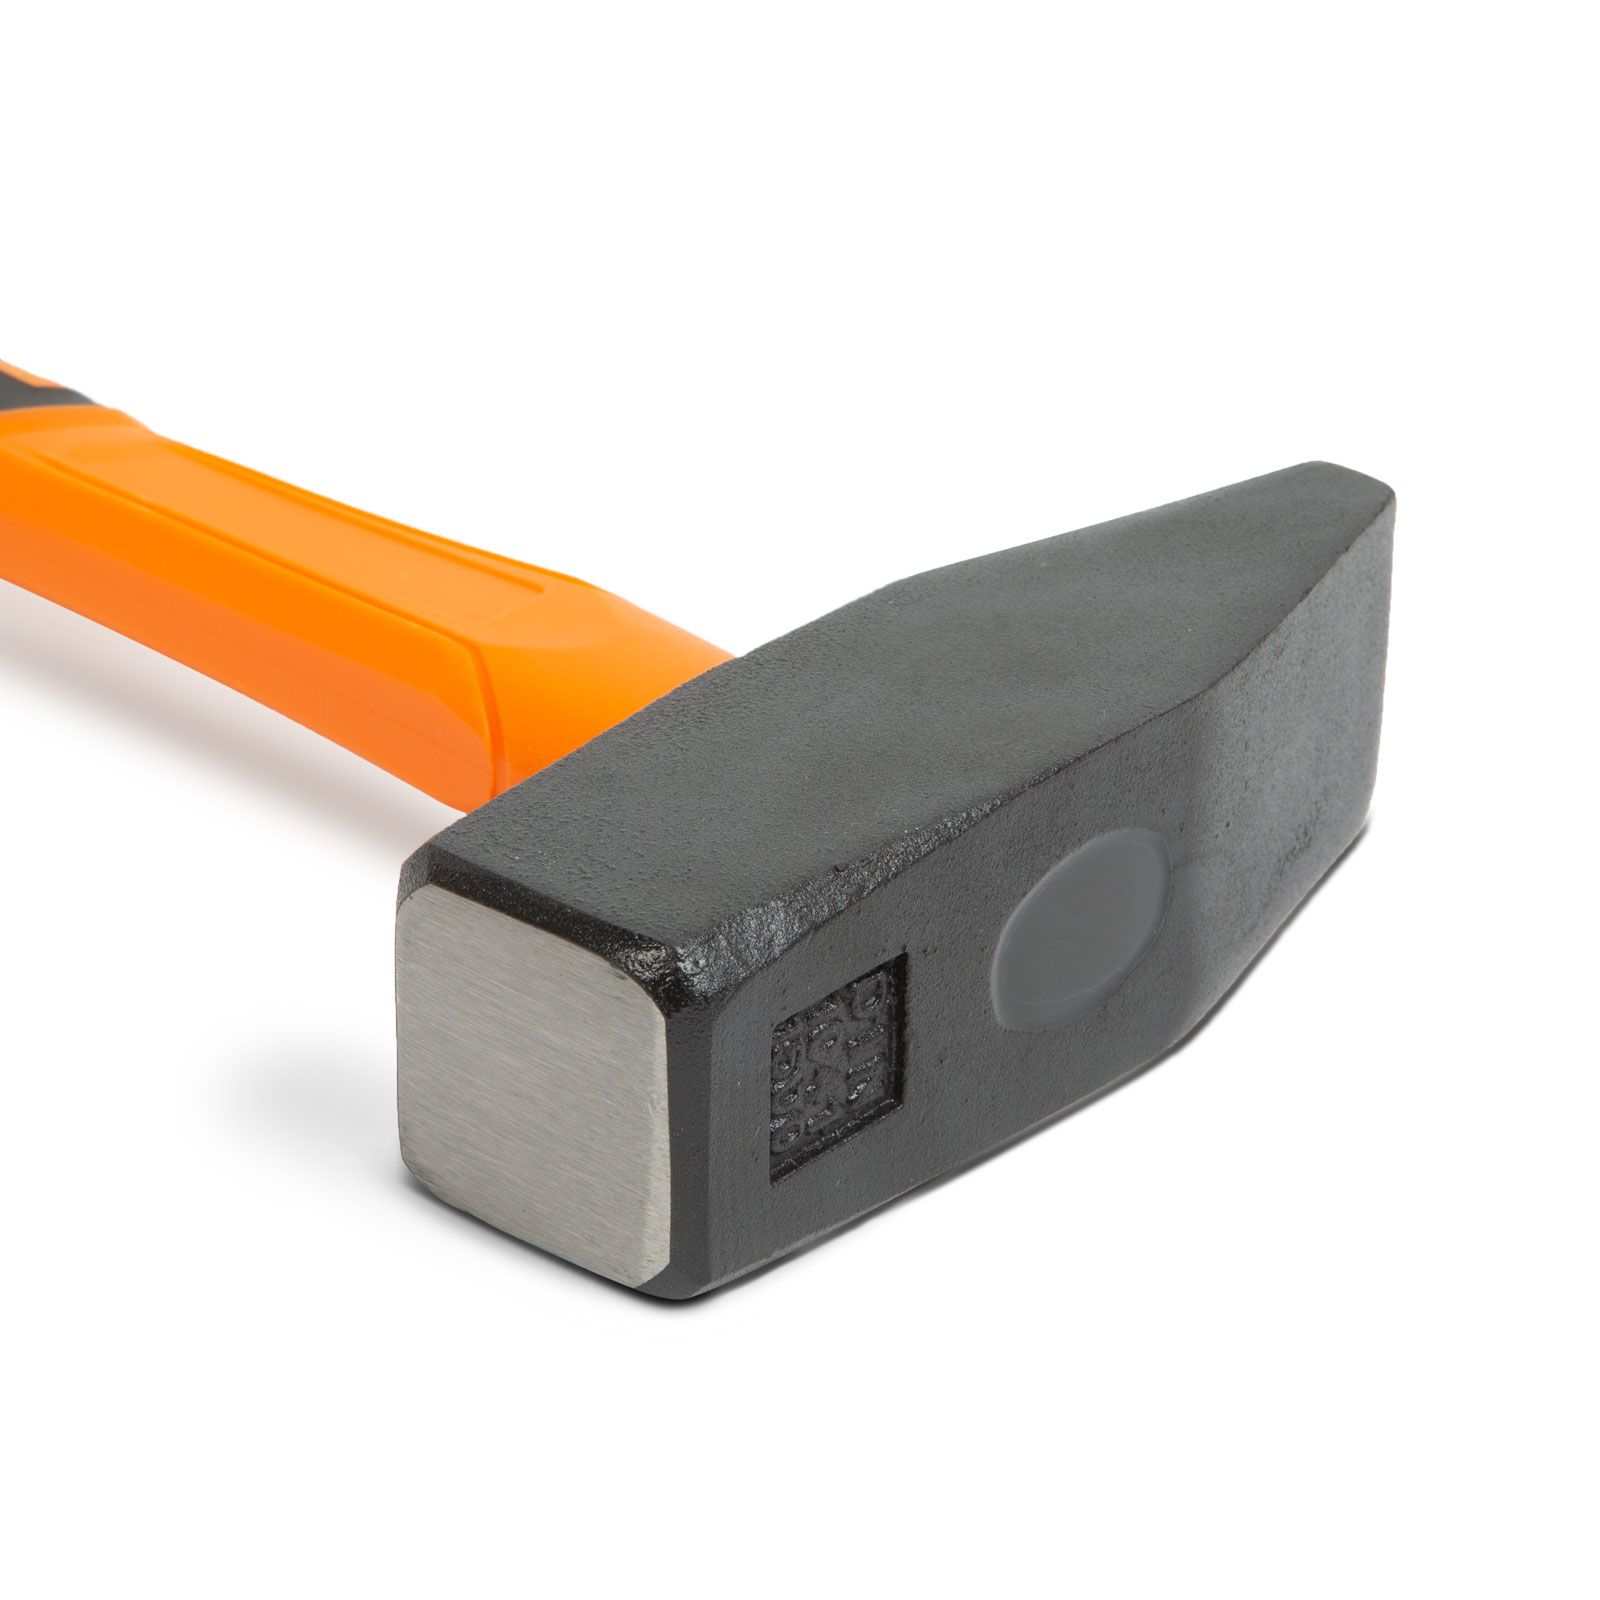 Machinist hammer with fiberglass handle - 1500 g thumb